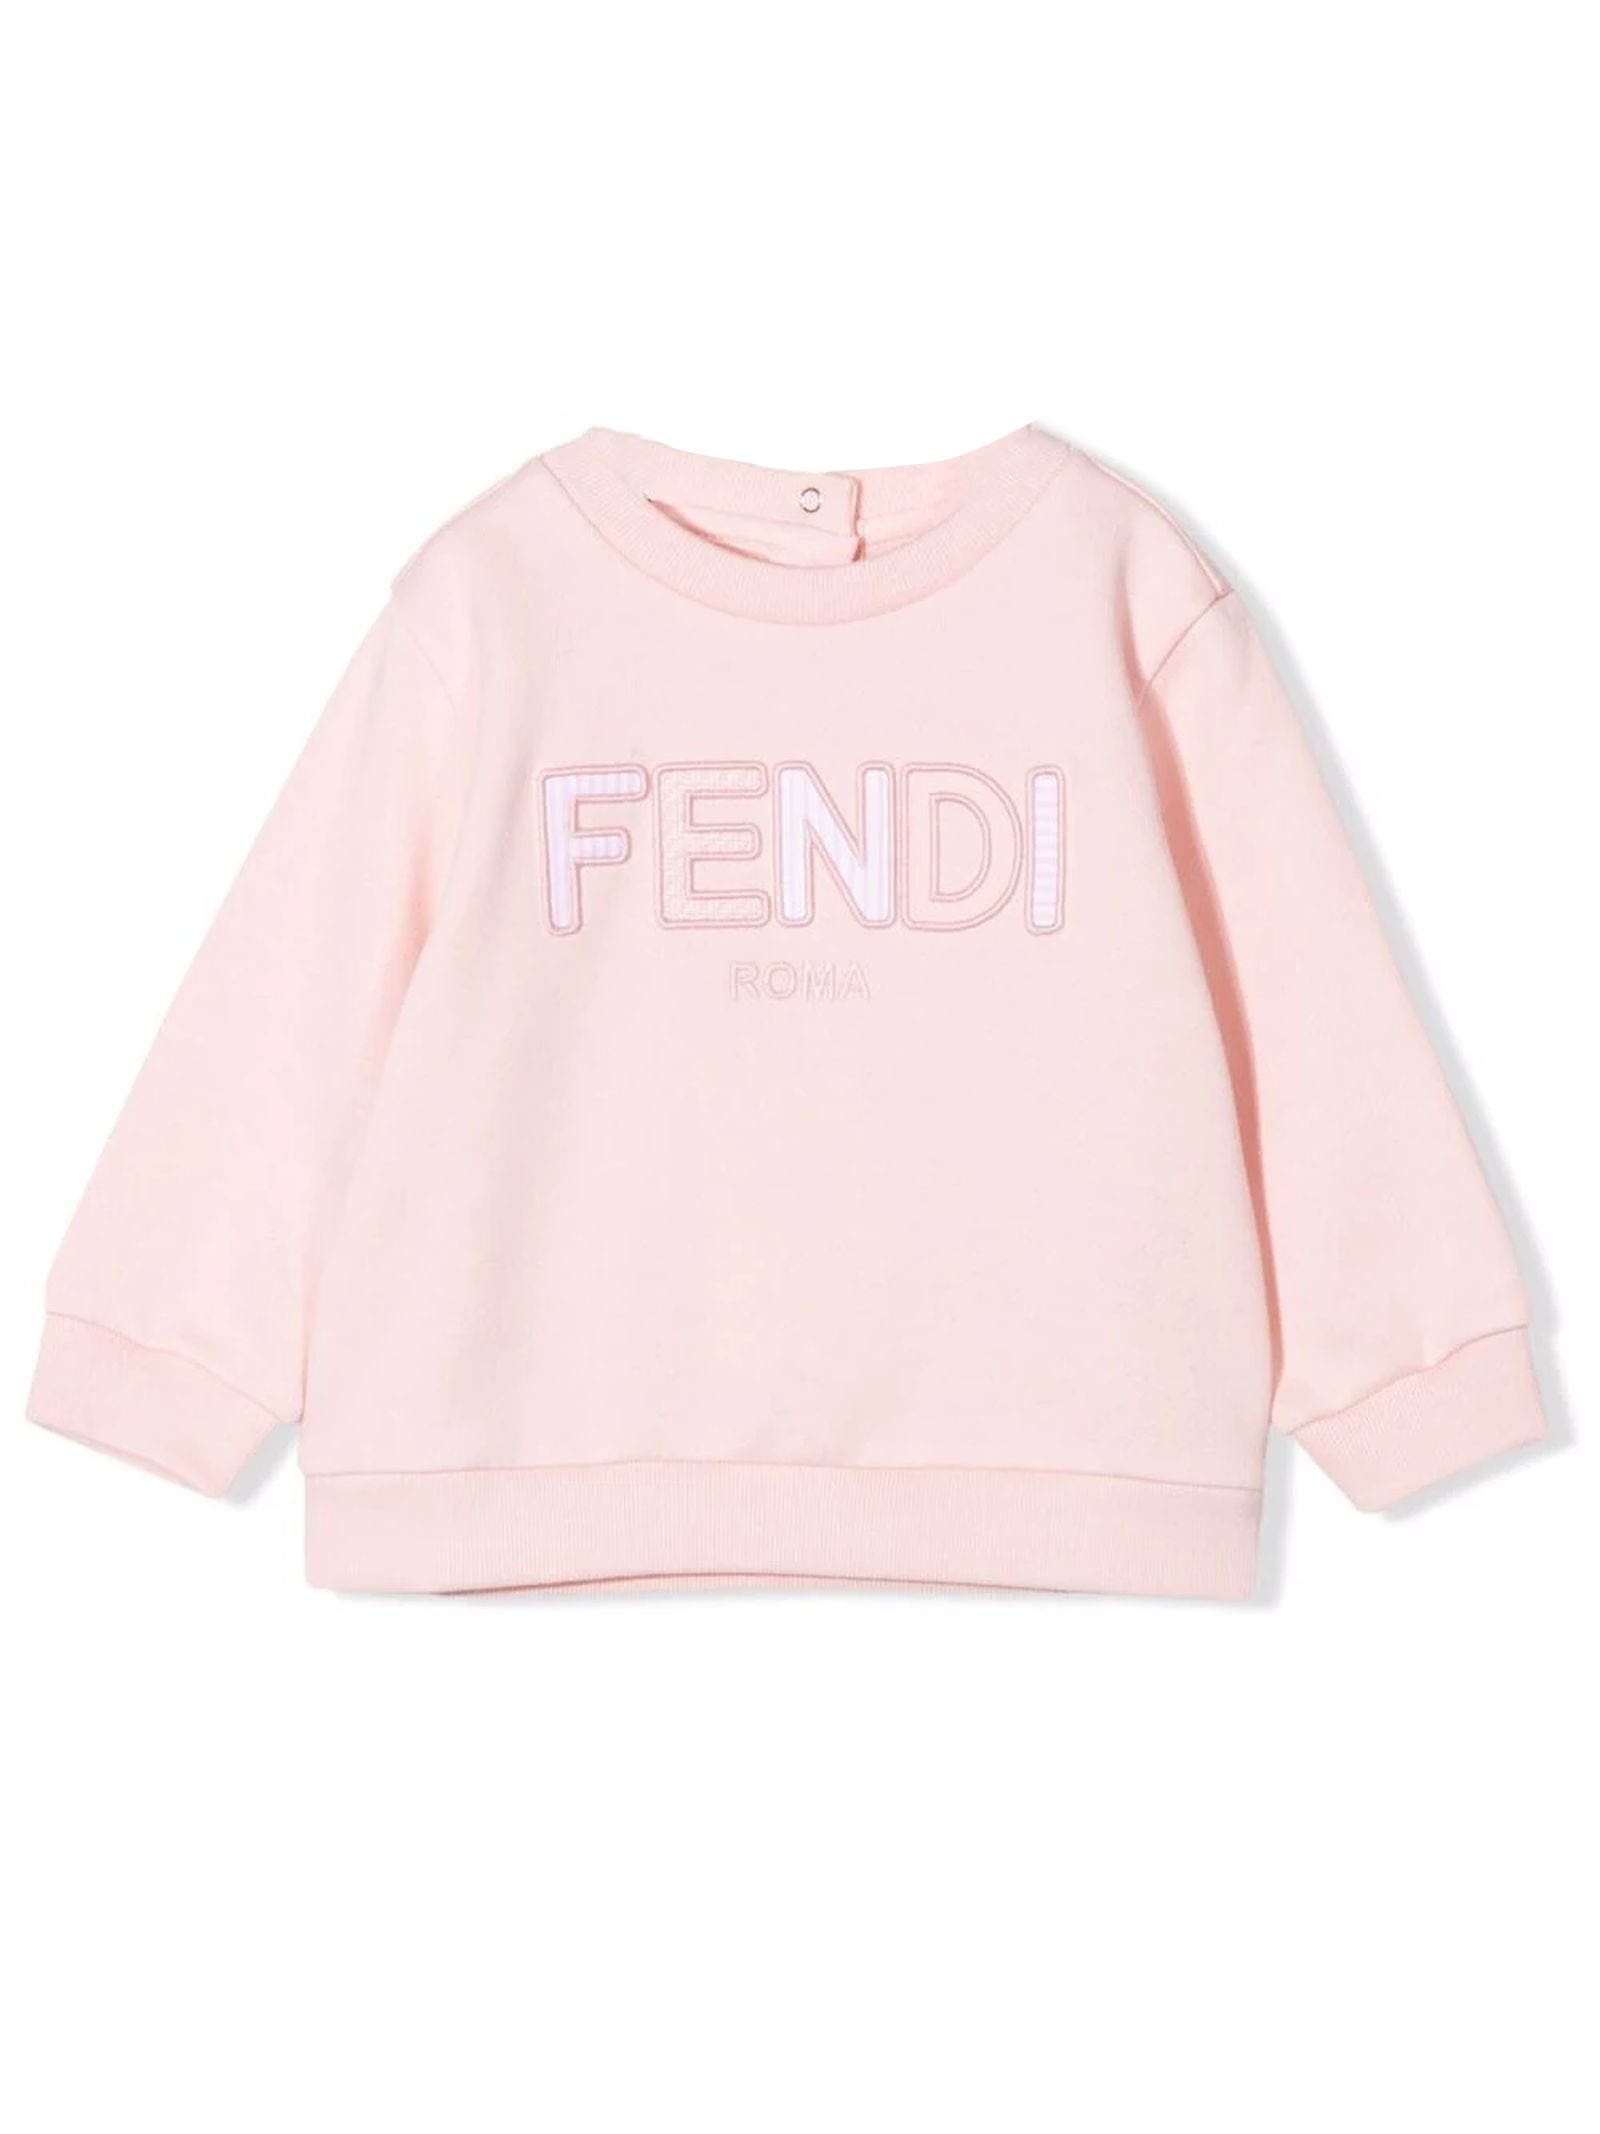 Fendi Light Pink Cotton Sweatshirt